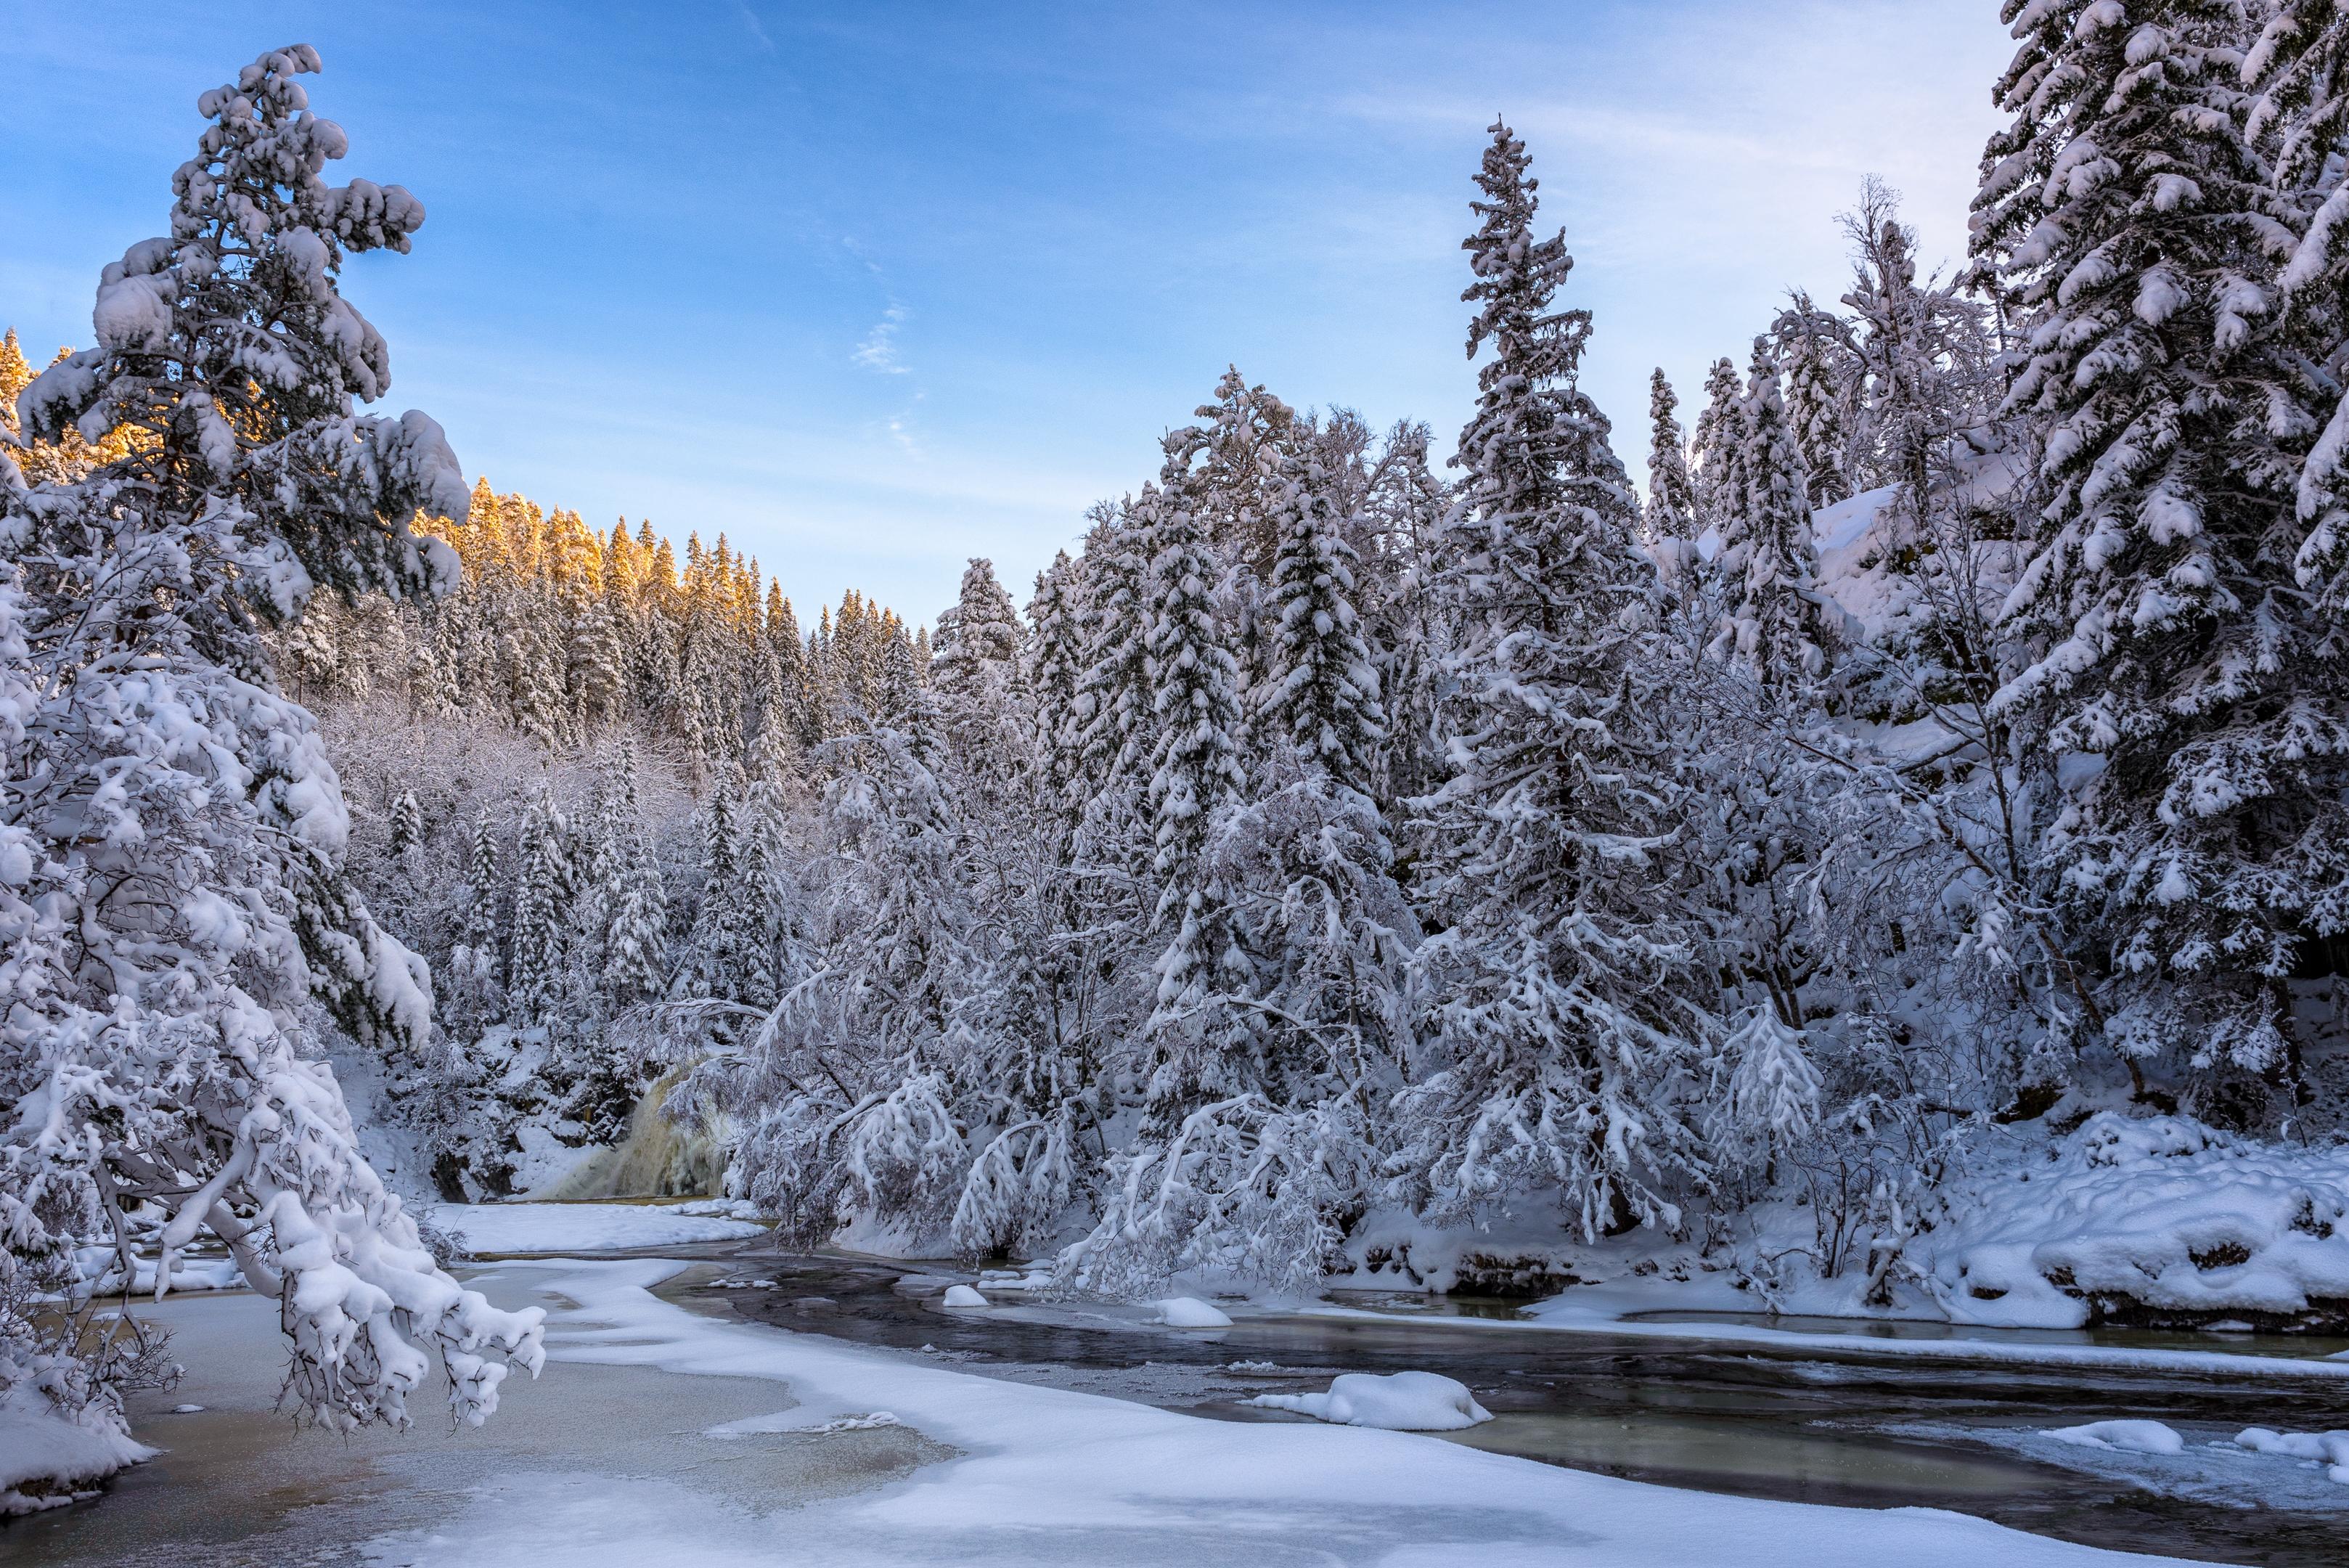 Unfrozen river among Christmas trees in winter